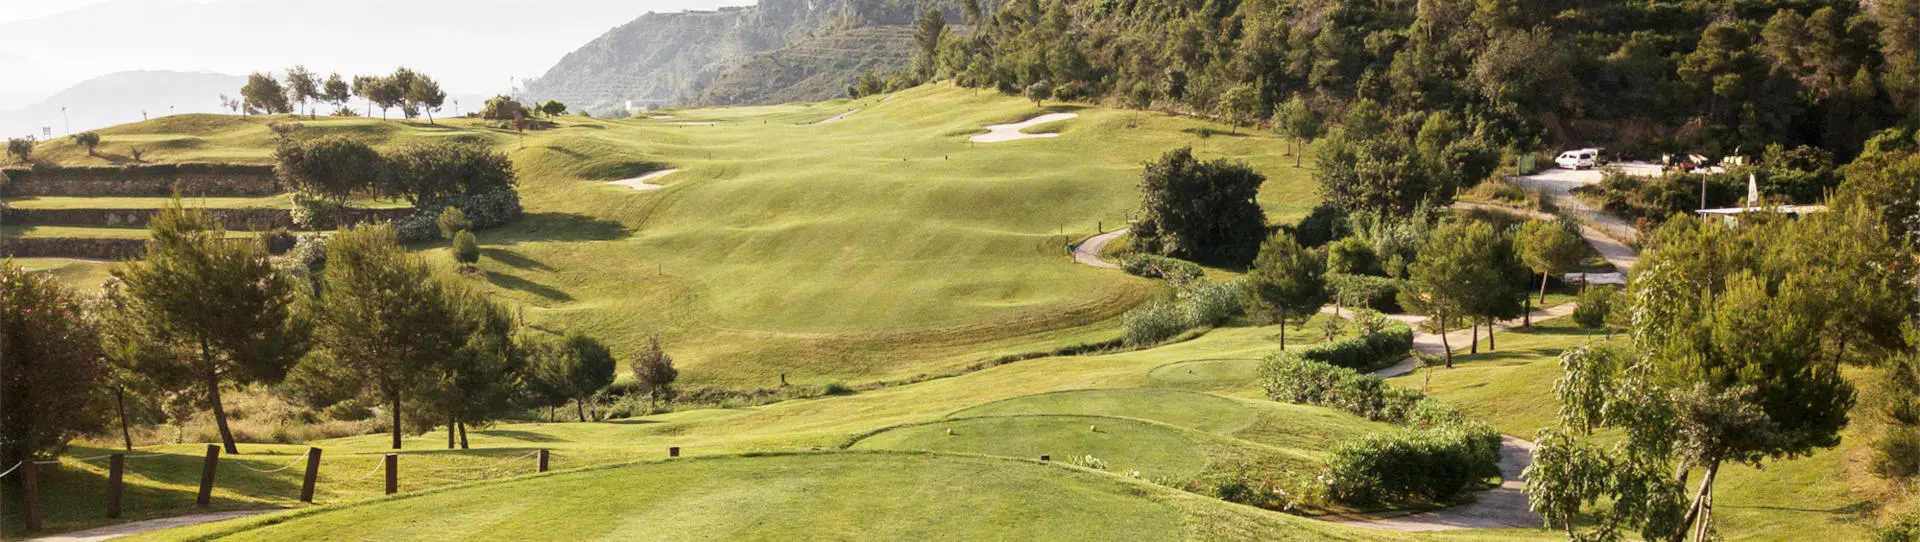 Spain golf courses - La Galiana Golf Course - Photo 2